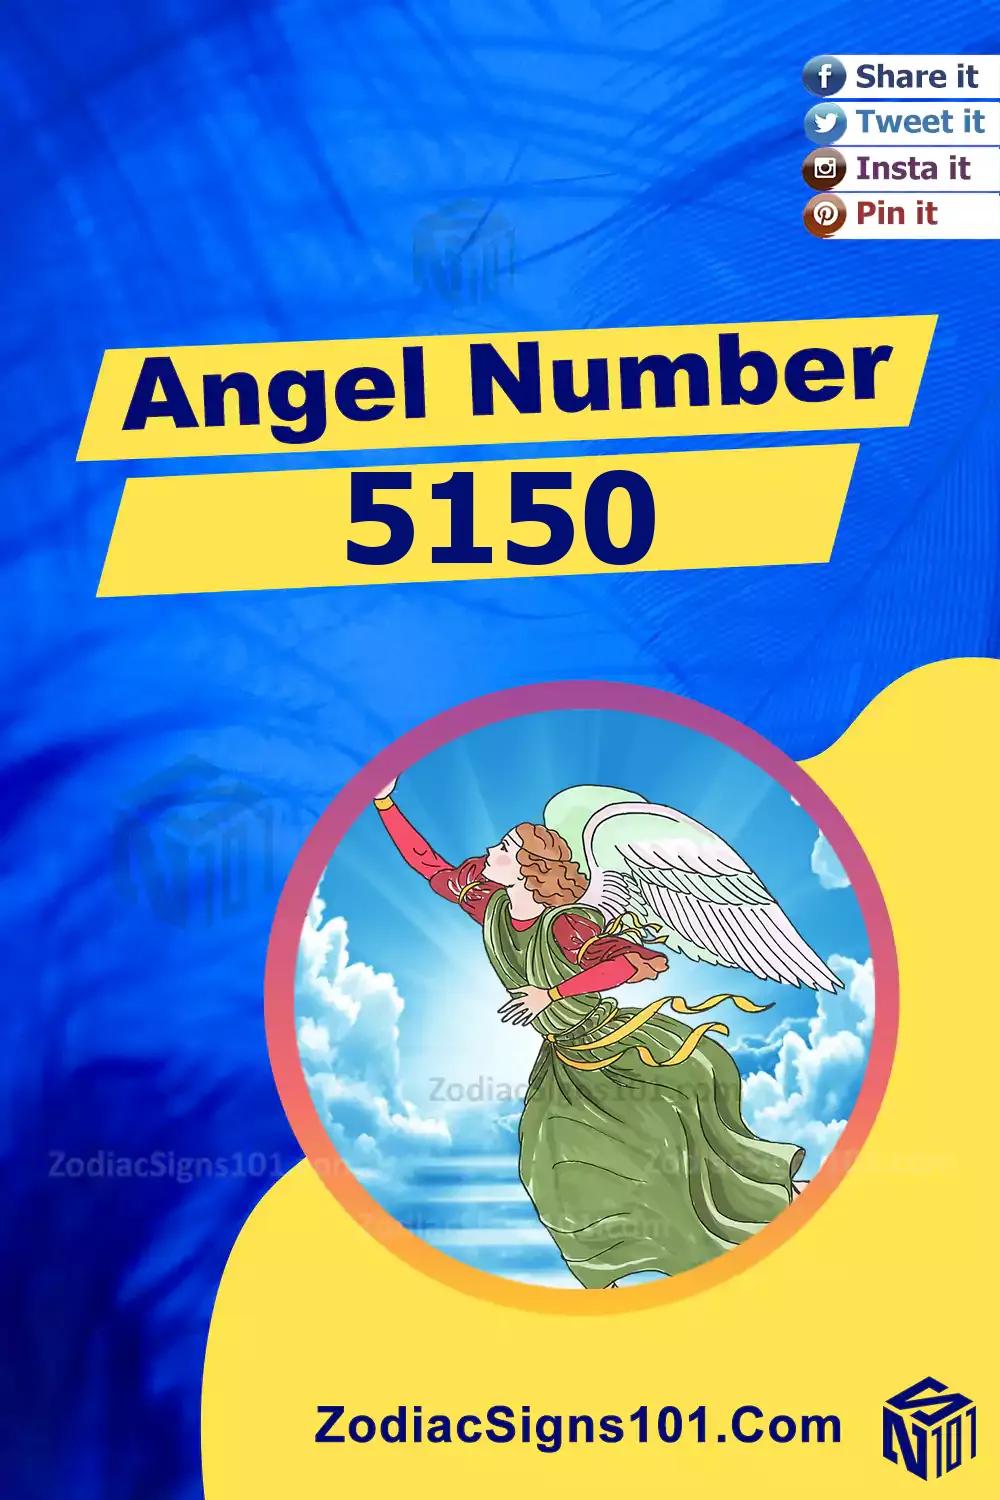 5150-Angel-Number-Meaning.jpg